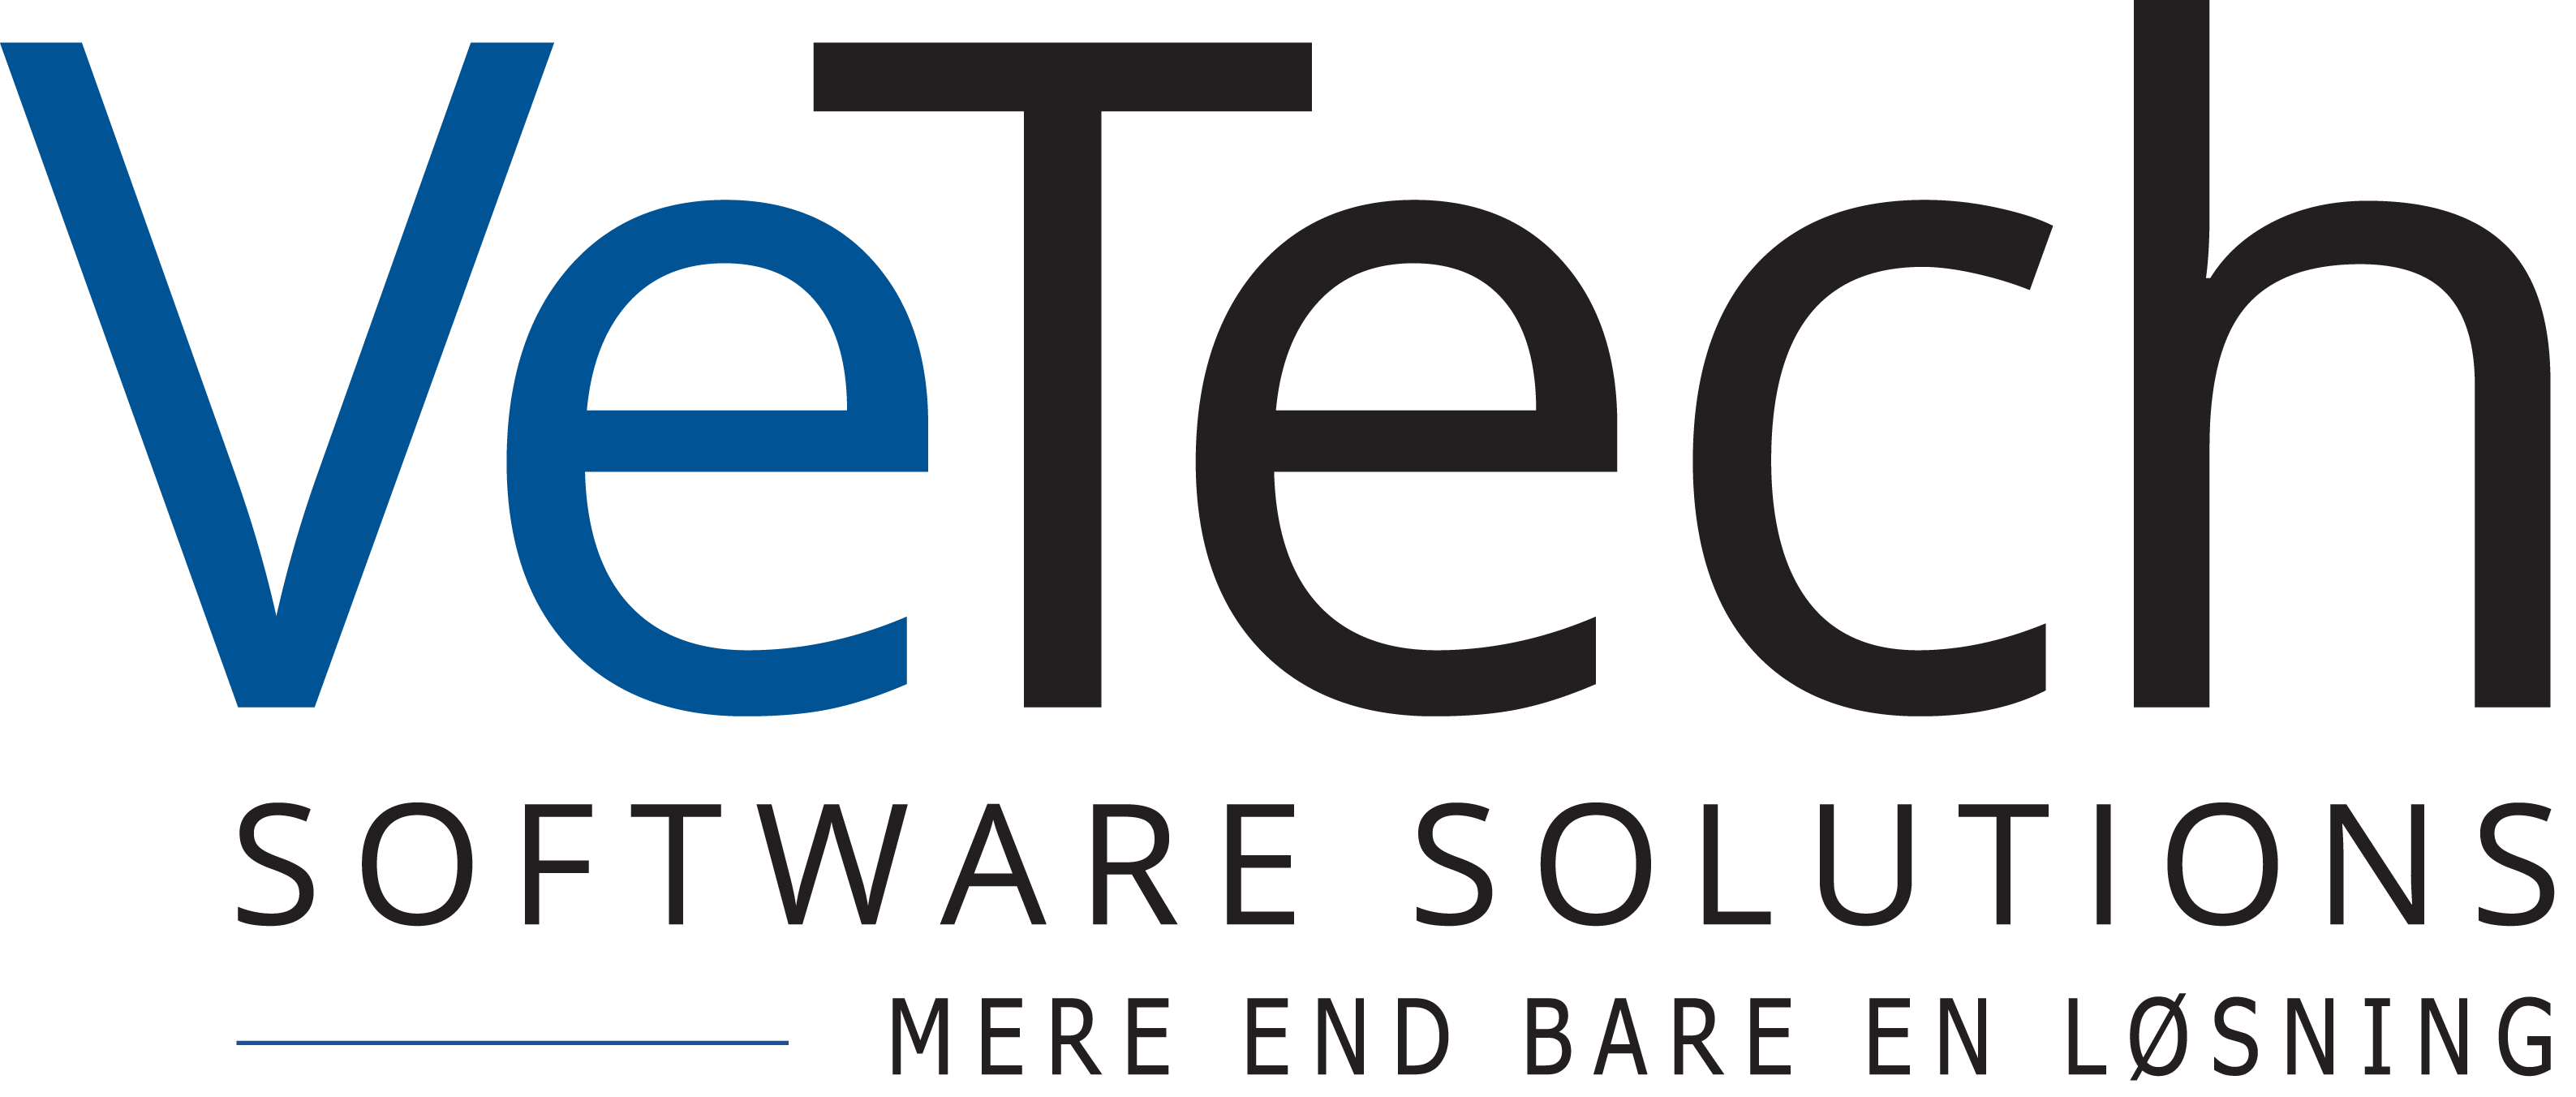 Vetech Software Solutions